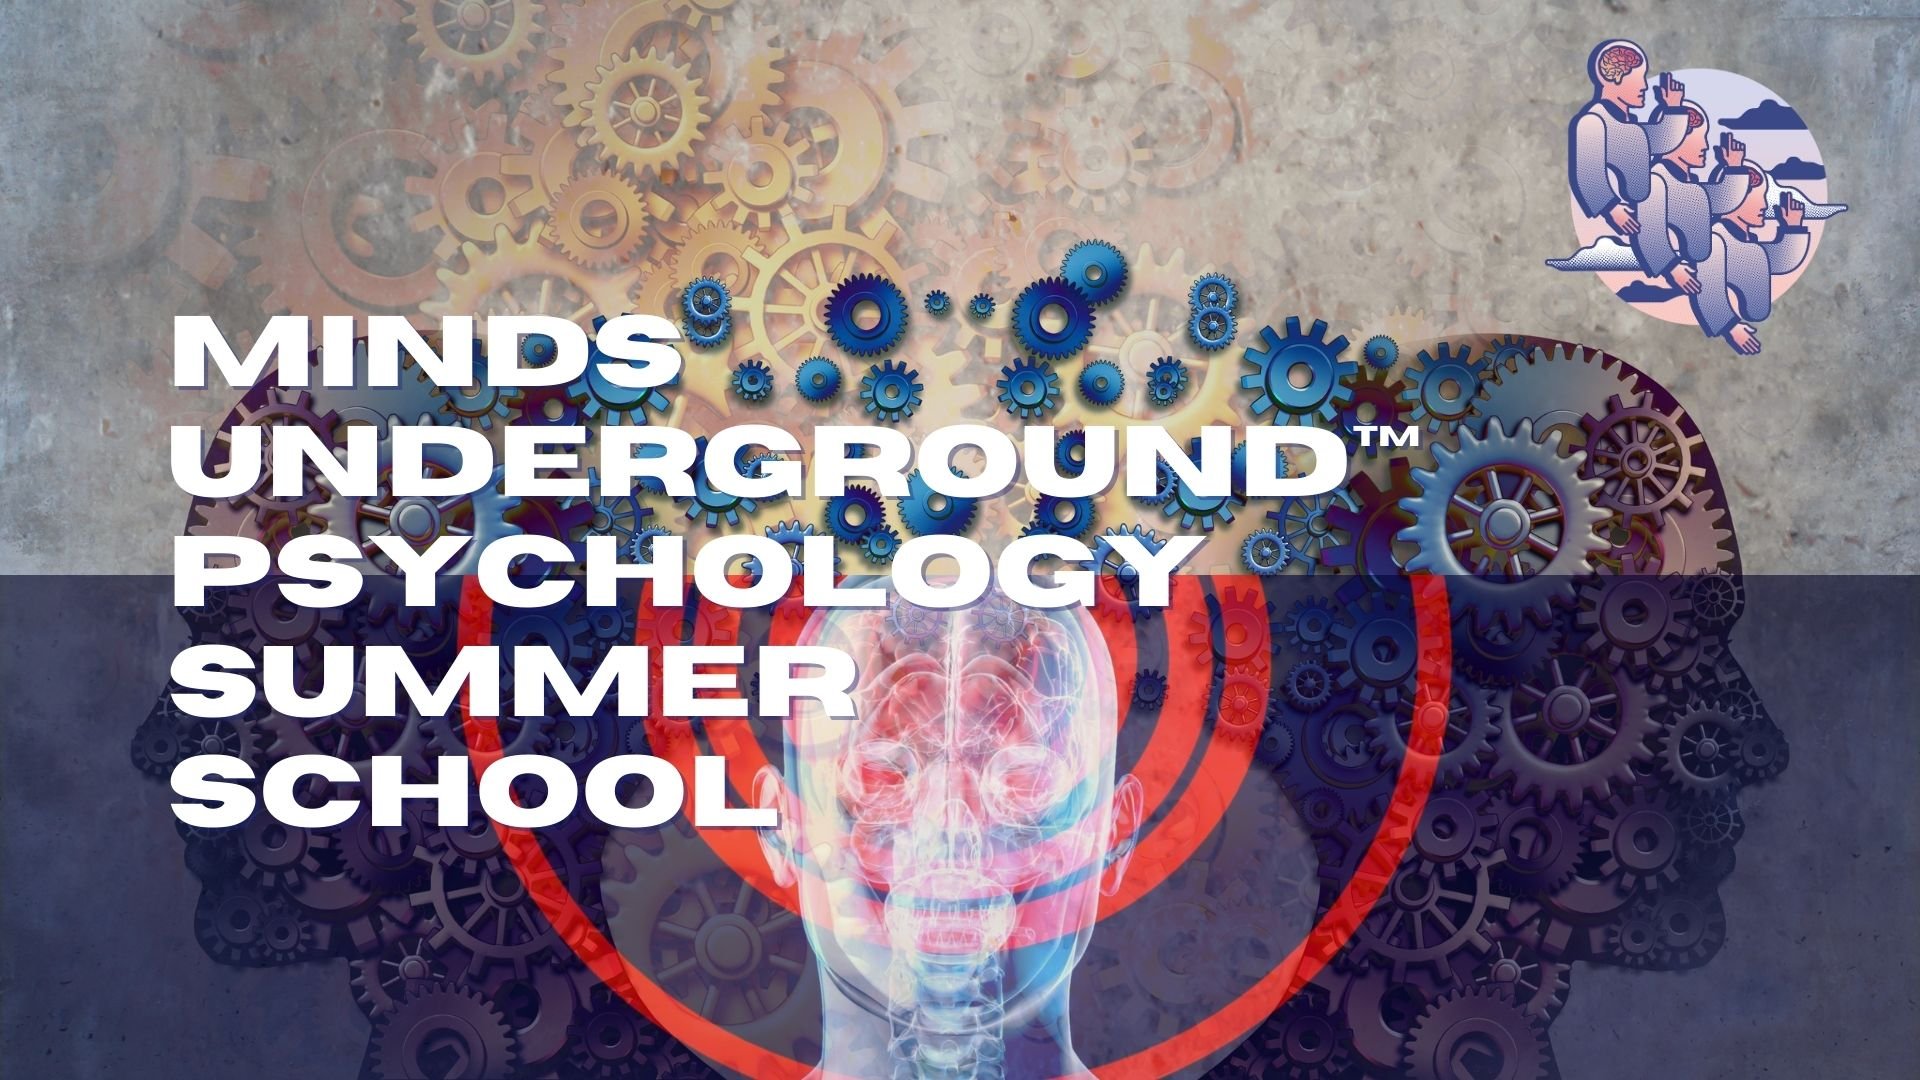 Psychology Summer School.jpg